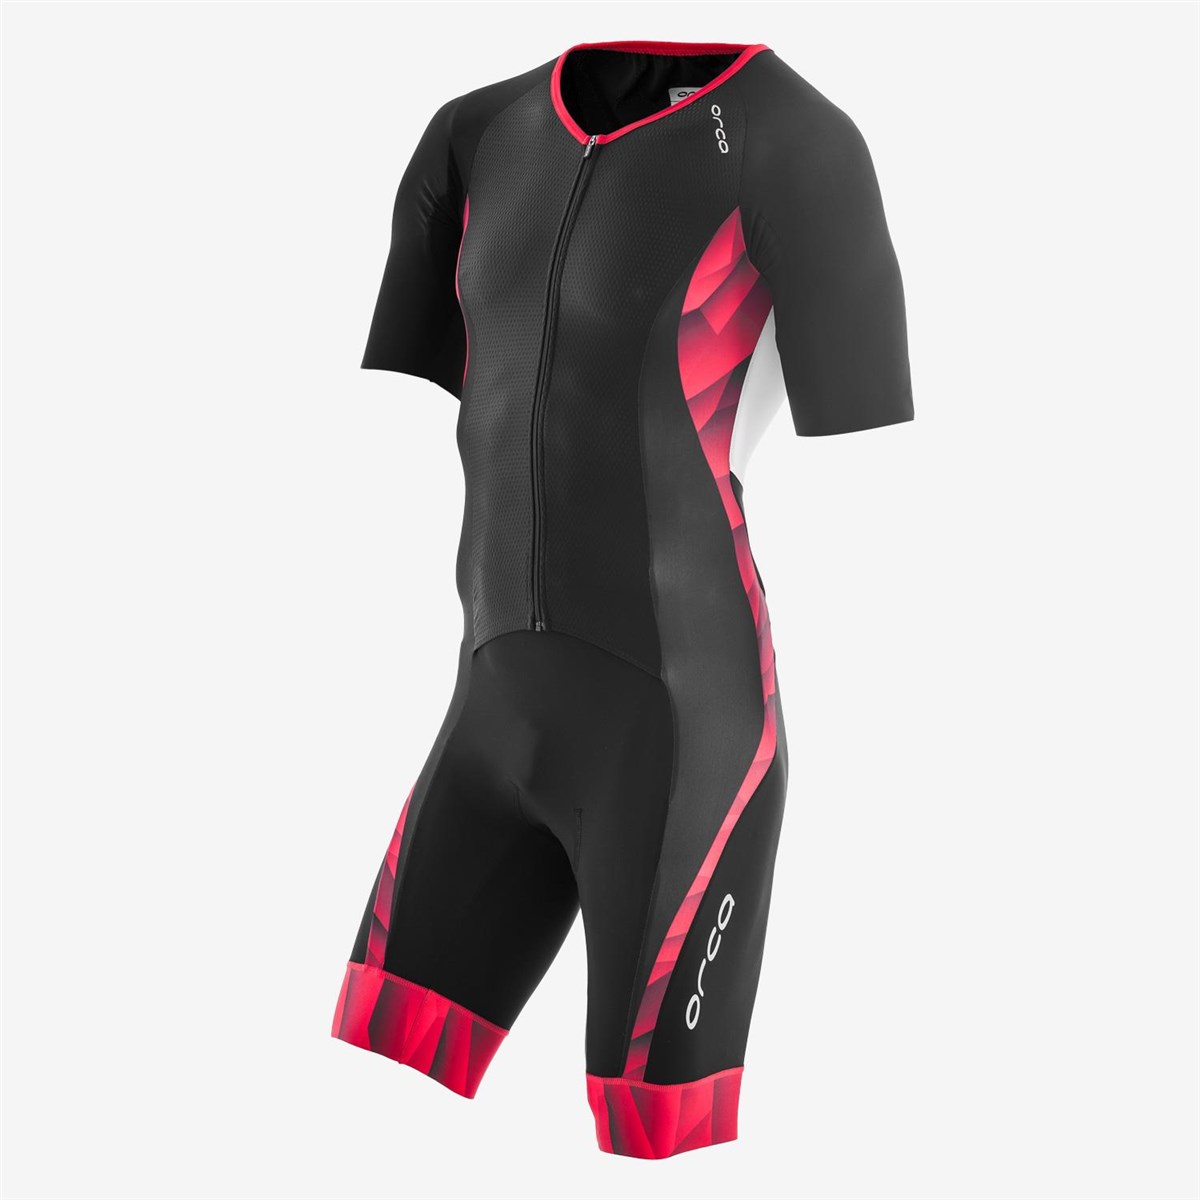 Orca 226 Short Sleeve Race Suit product image